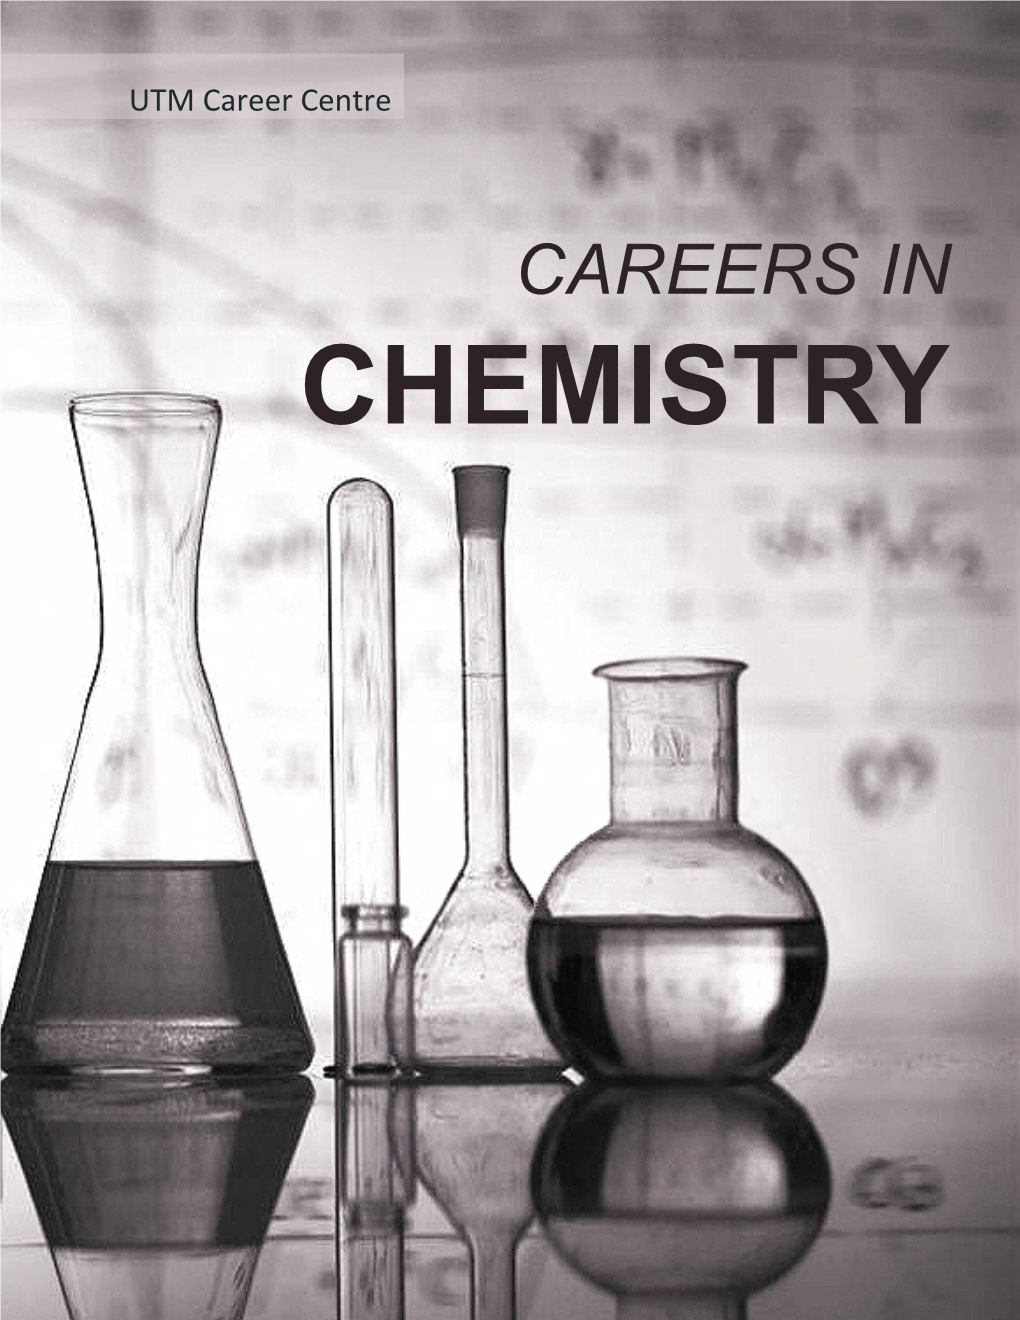 Careers in Chemistry (2019)